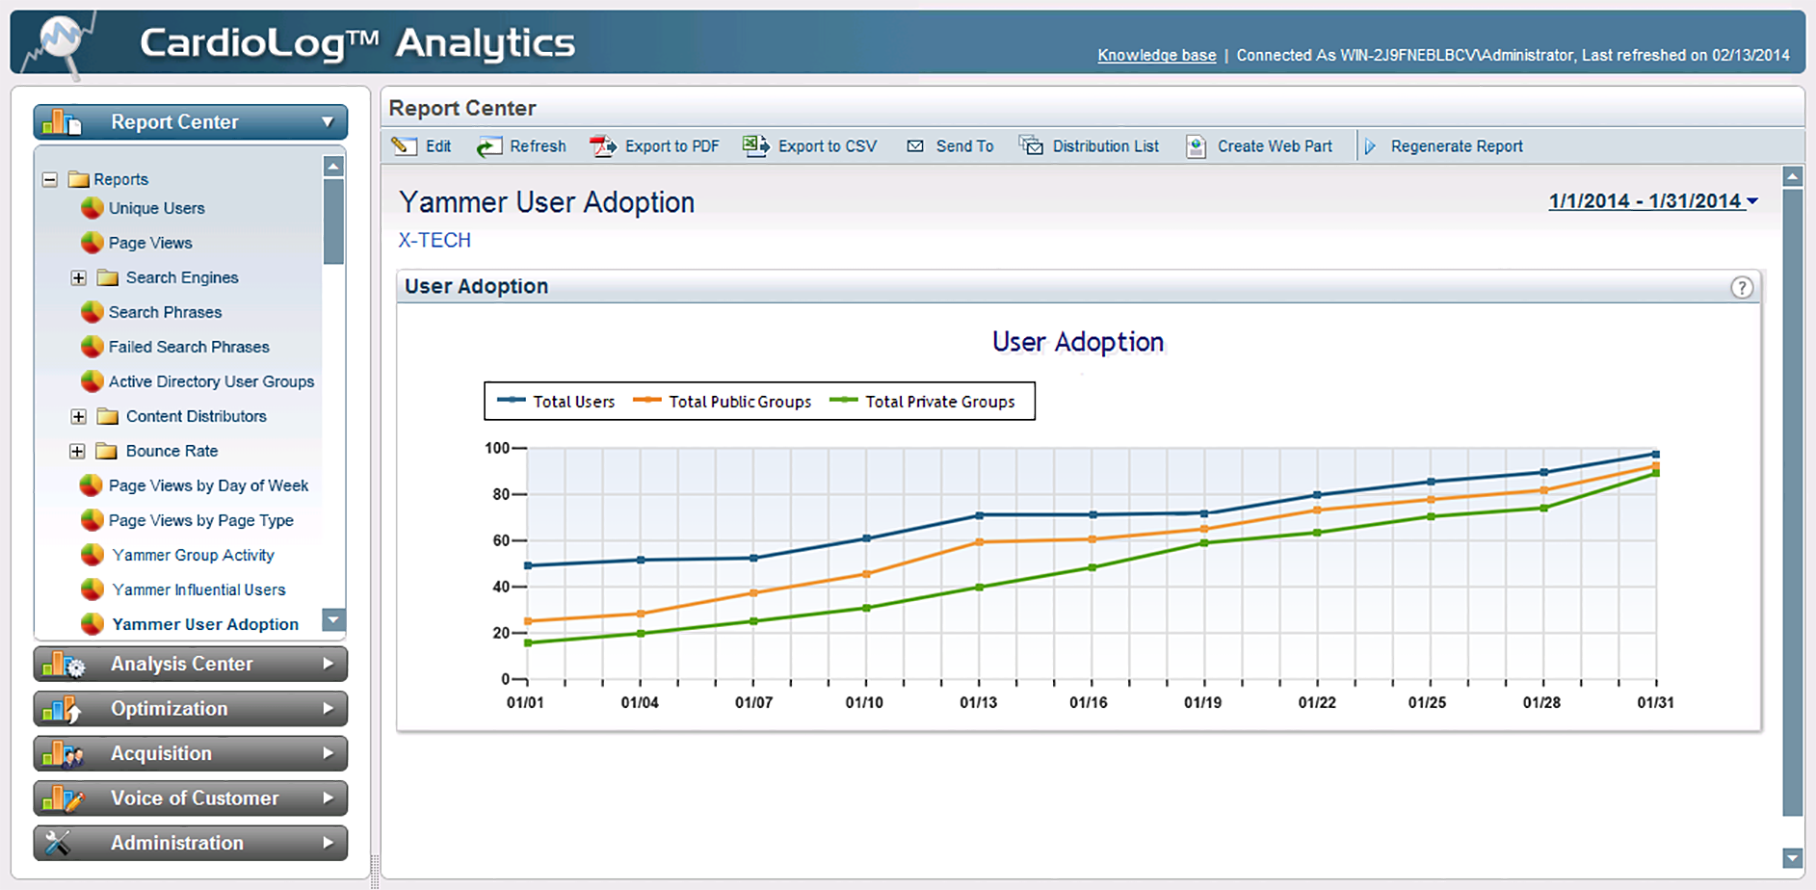 Yammer User Adoption Report: screenshot of rising rates of Yammer User Adoption over a month.